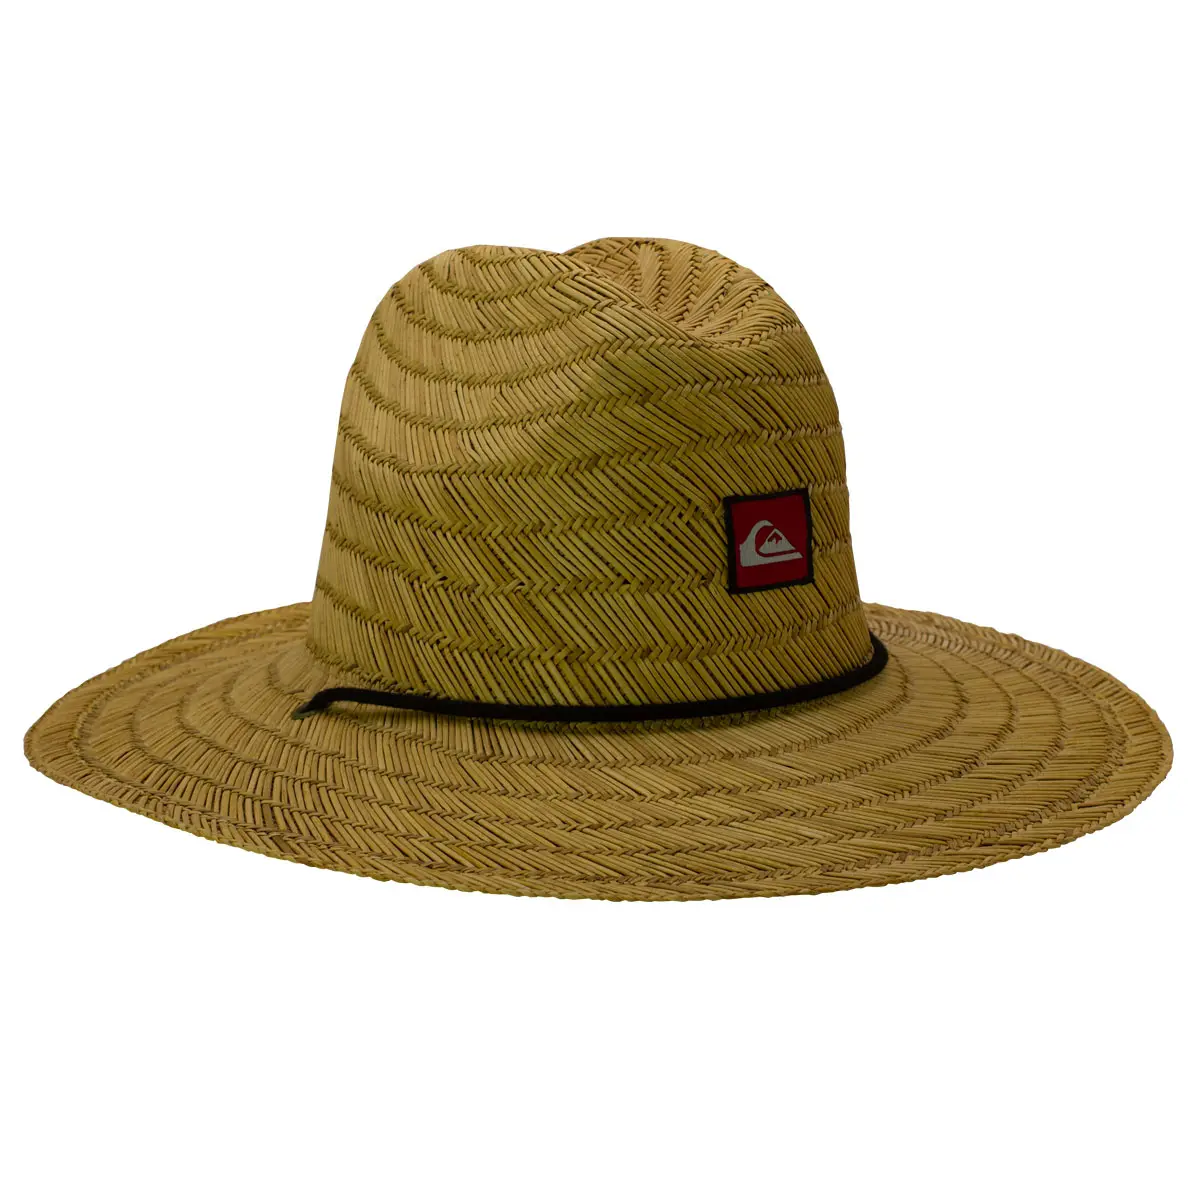 Beach Hat Fashion Beach Cowboy Style Promotional Straw Hat